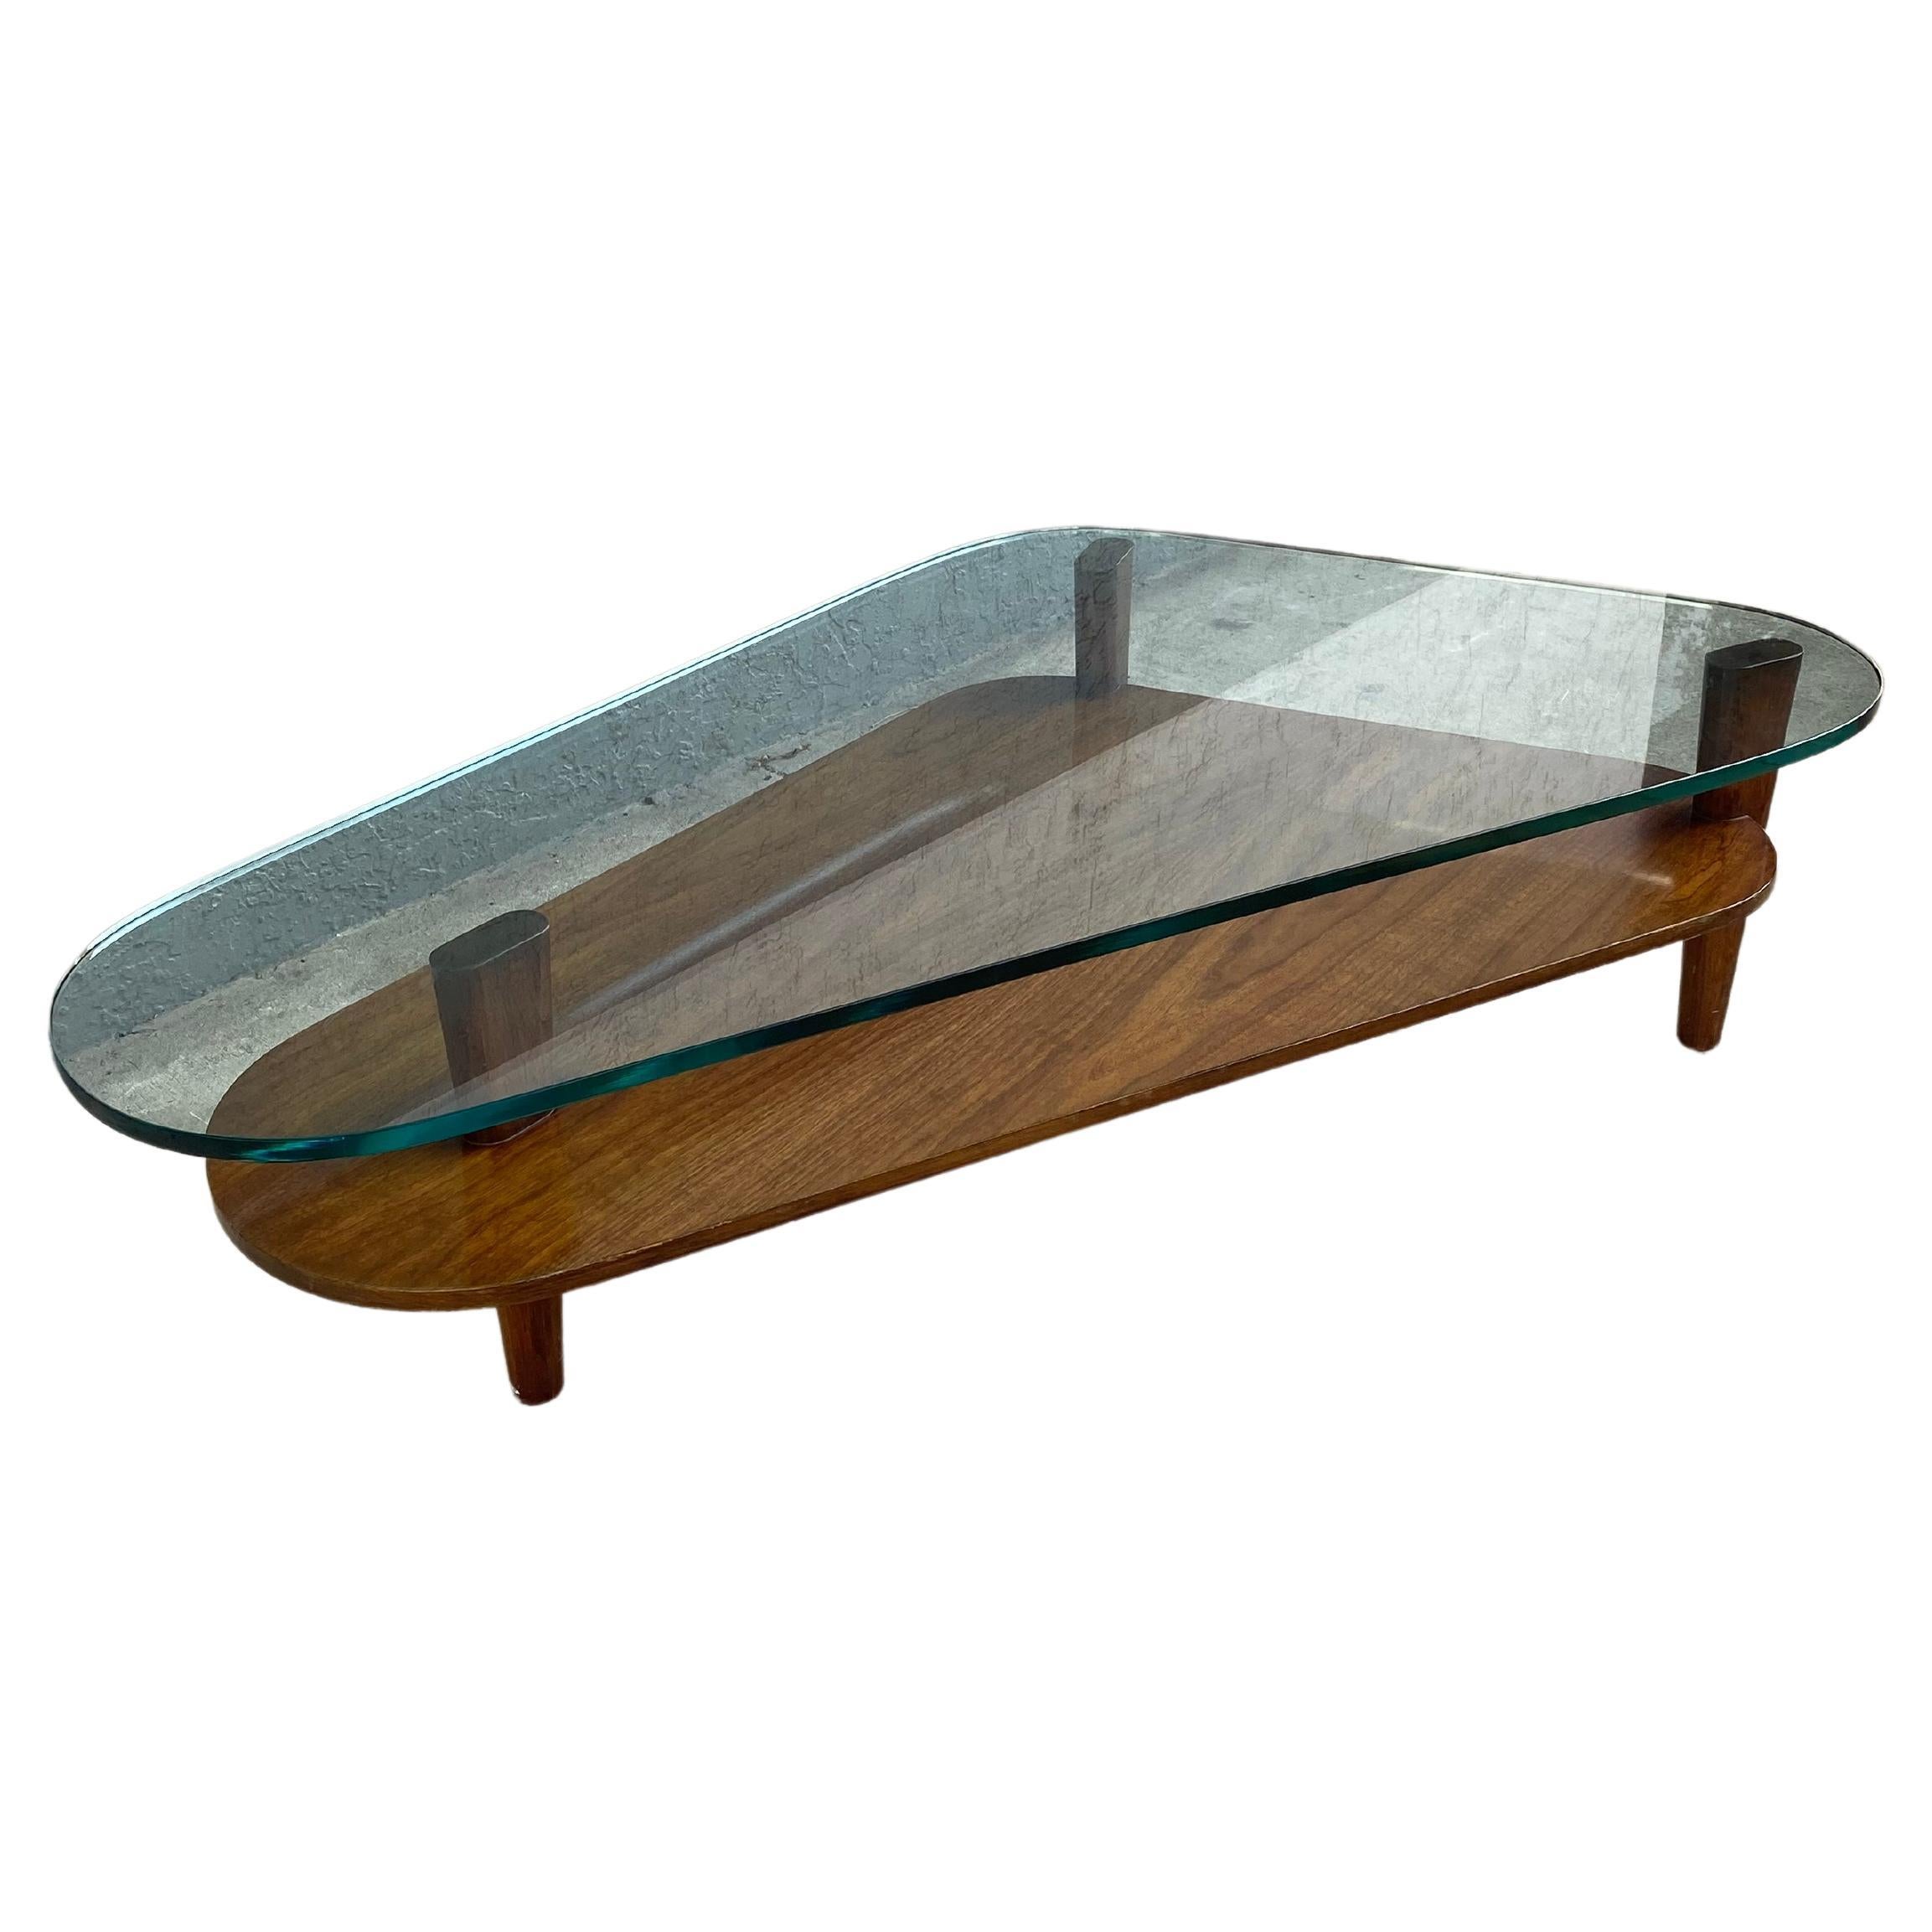 1960 Adrian Pearsall Table basse triangulaire en noyer avec plateau en verre 